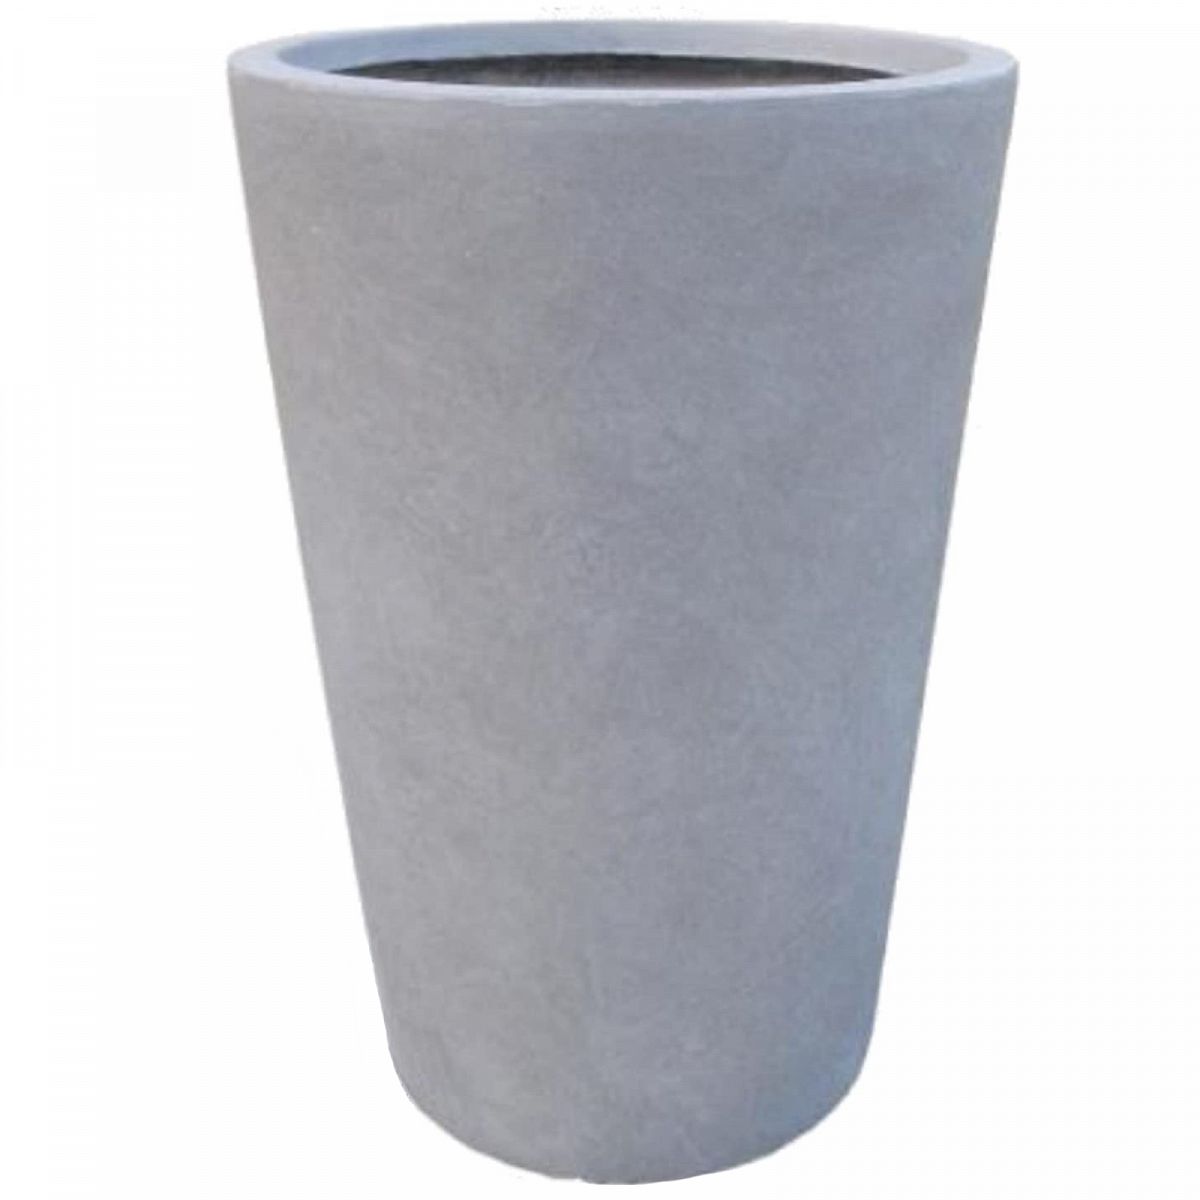 Contemporary Round Vase Stone Grey Light Concrete Planter by Idealist Lite